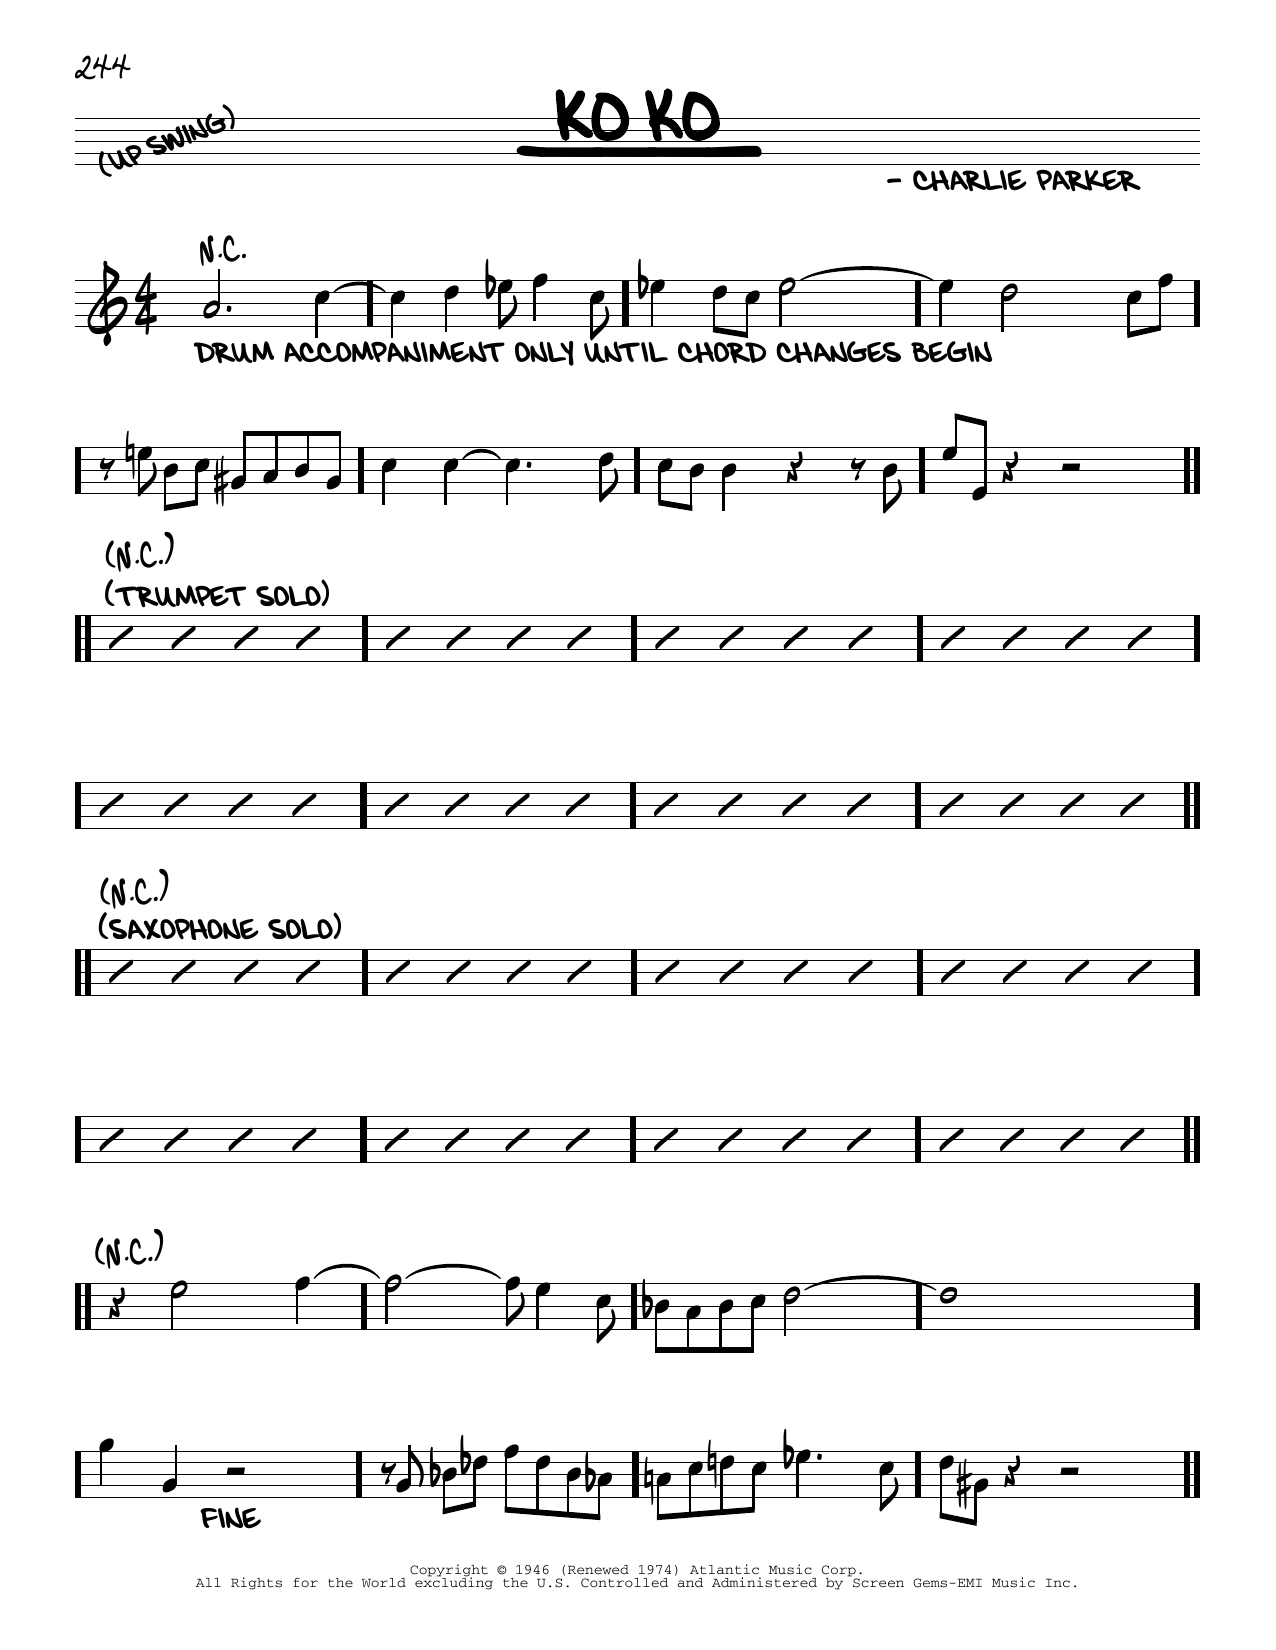 Charlie Parker Ko Ko Sheet Music Notes & Chords for Real Book – Melody & Chords - Download or Print PDF